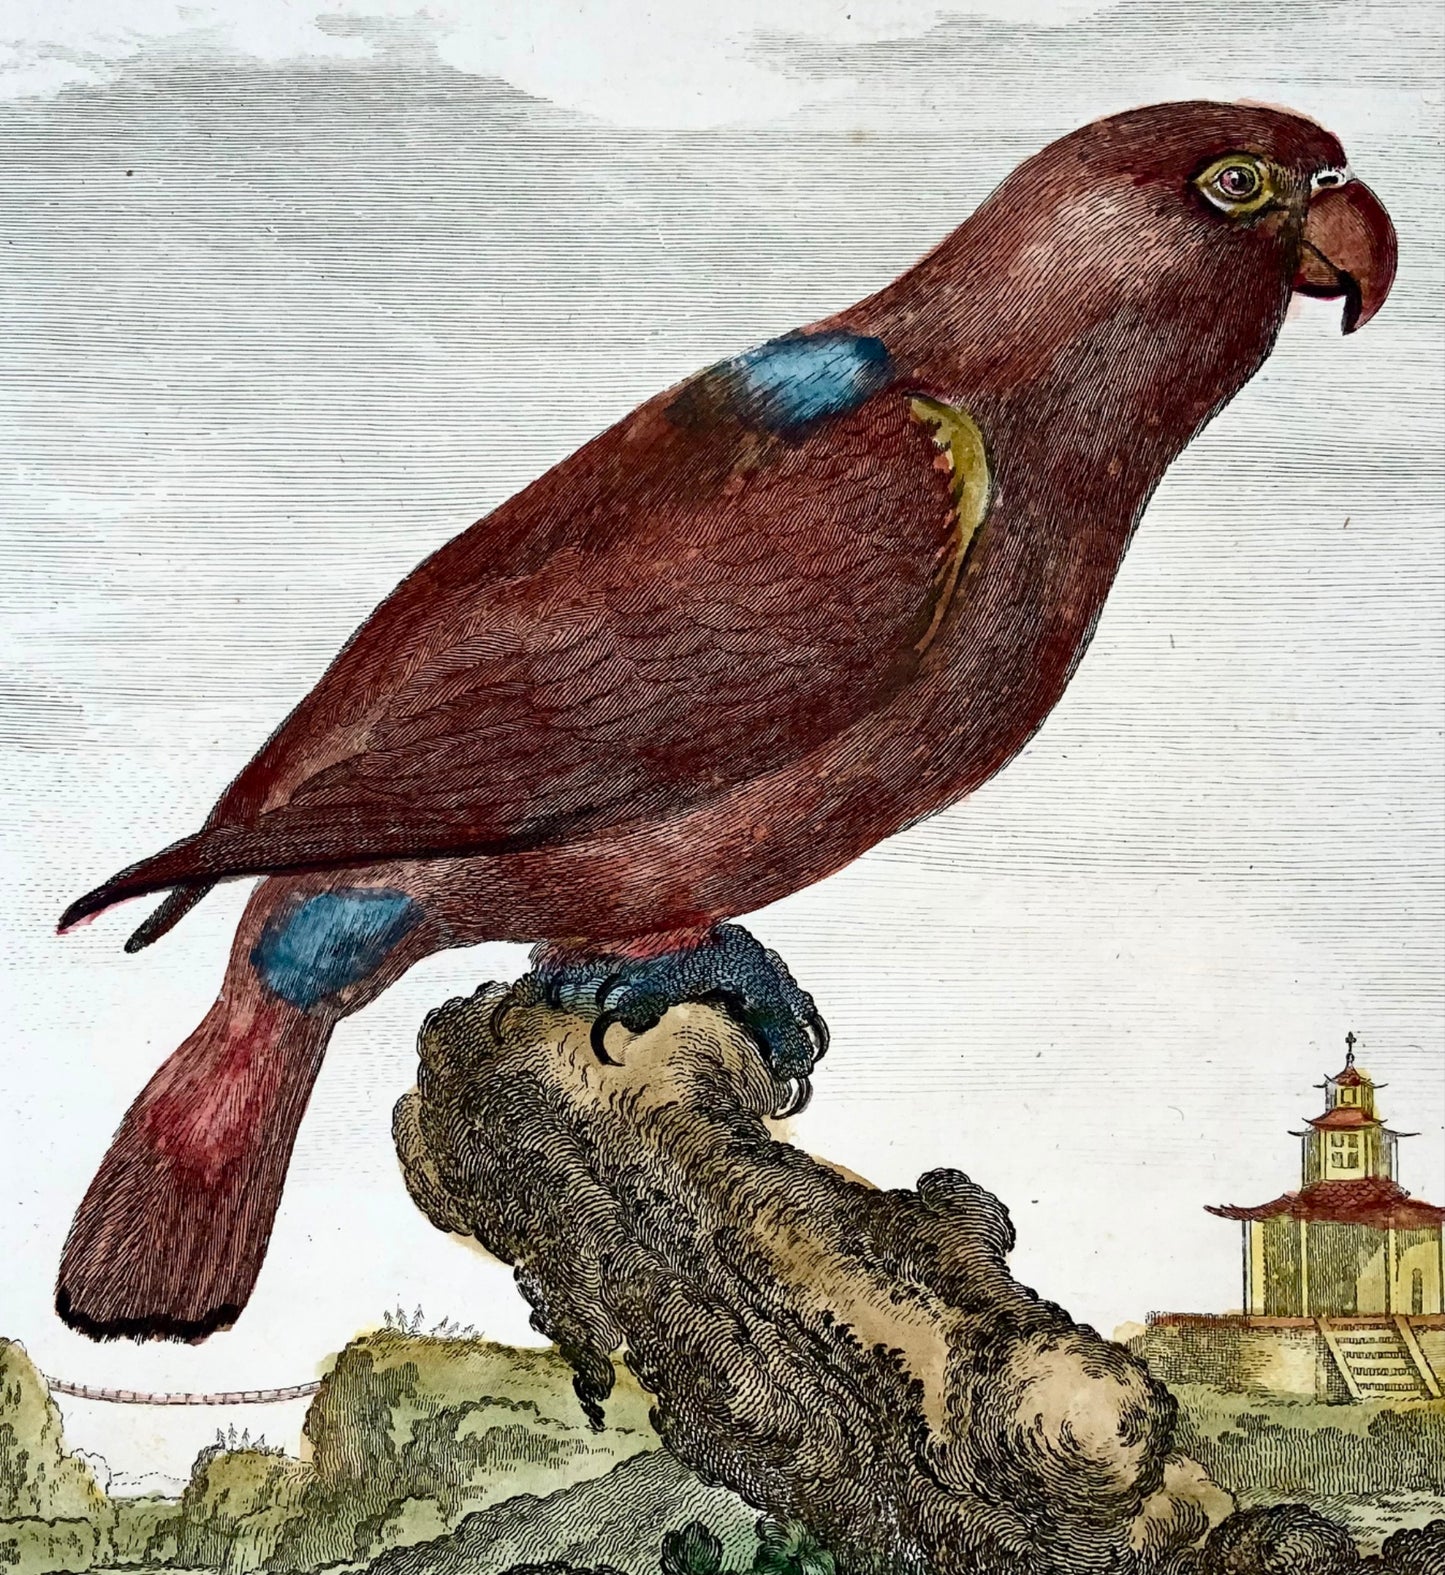 1771 Lori, De Seve, ornithologie, édition grand quart, gravure 